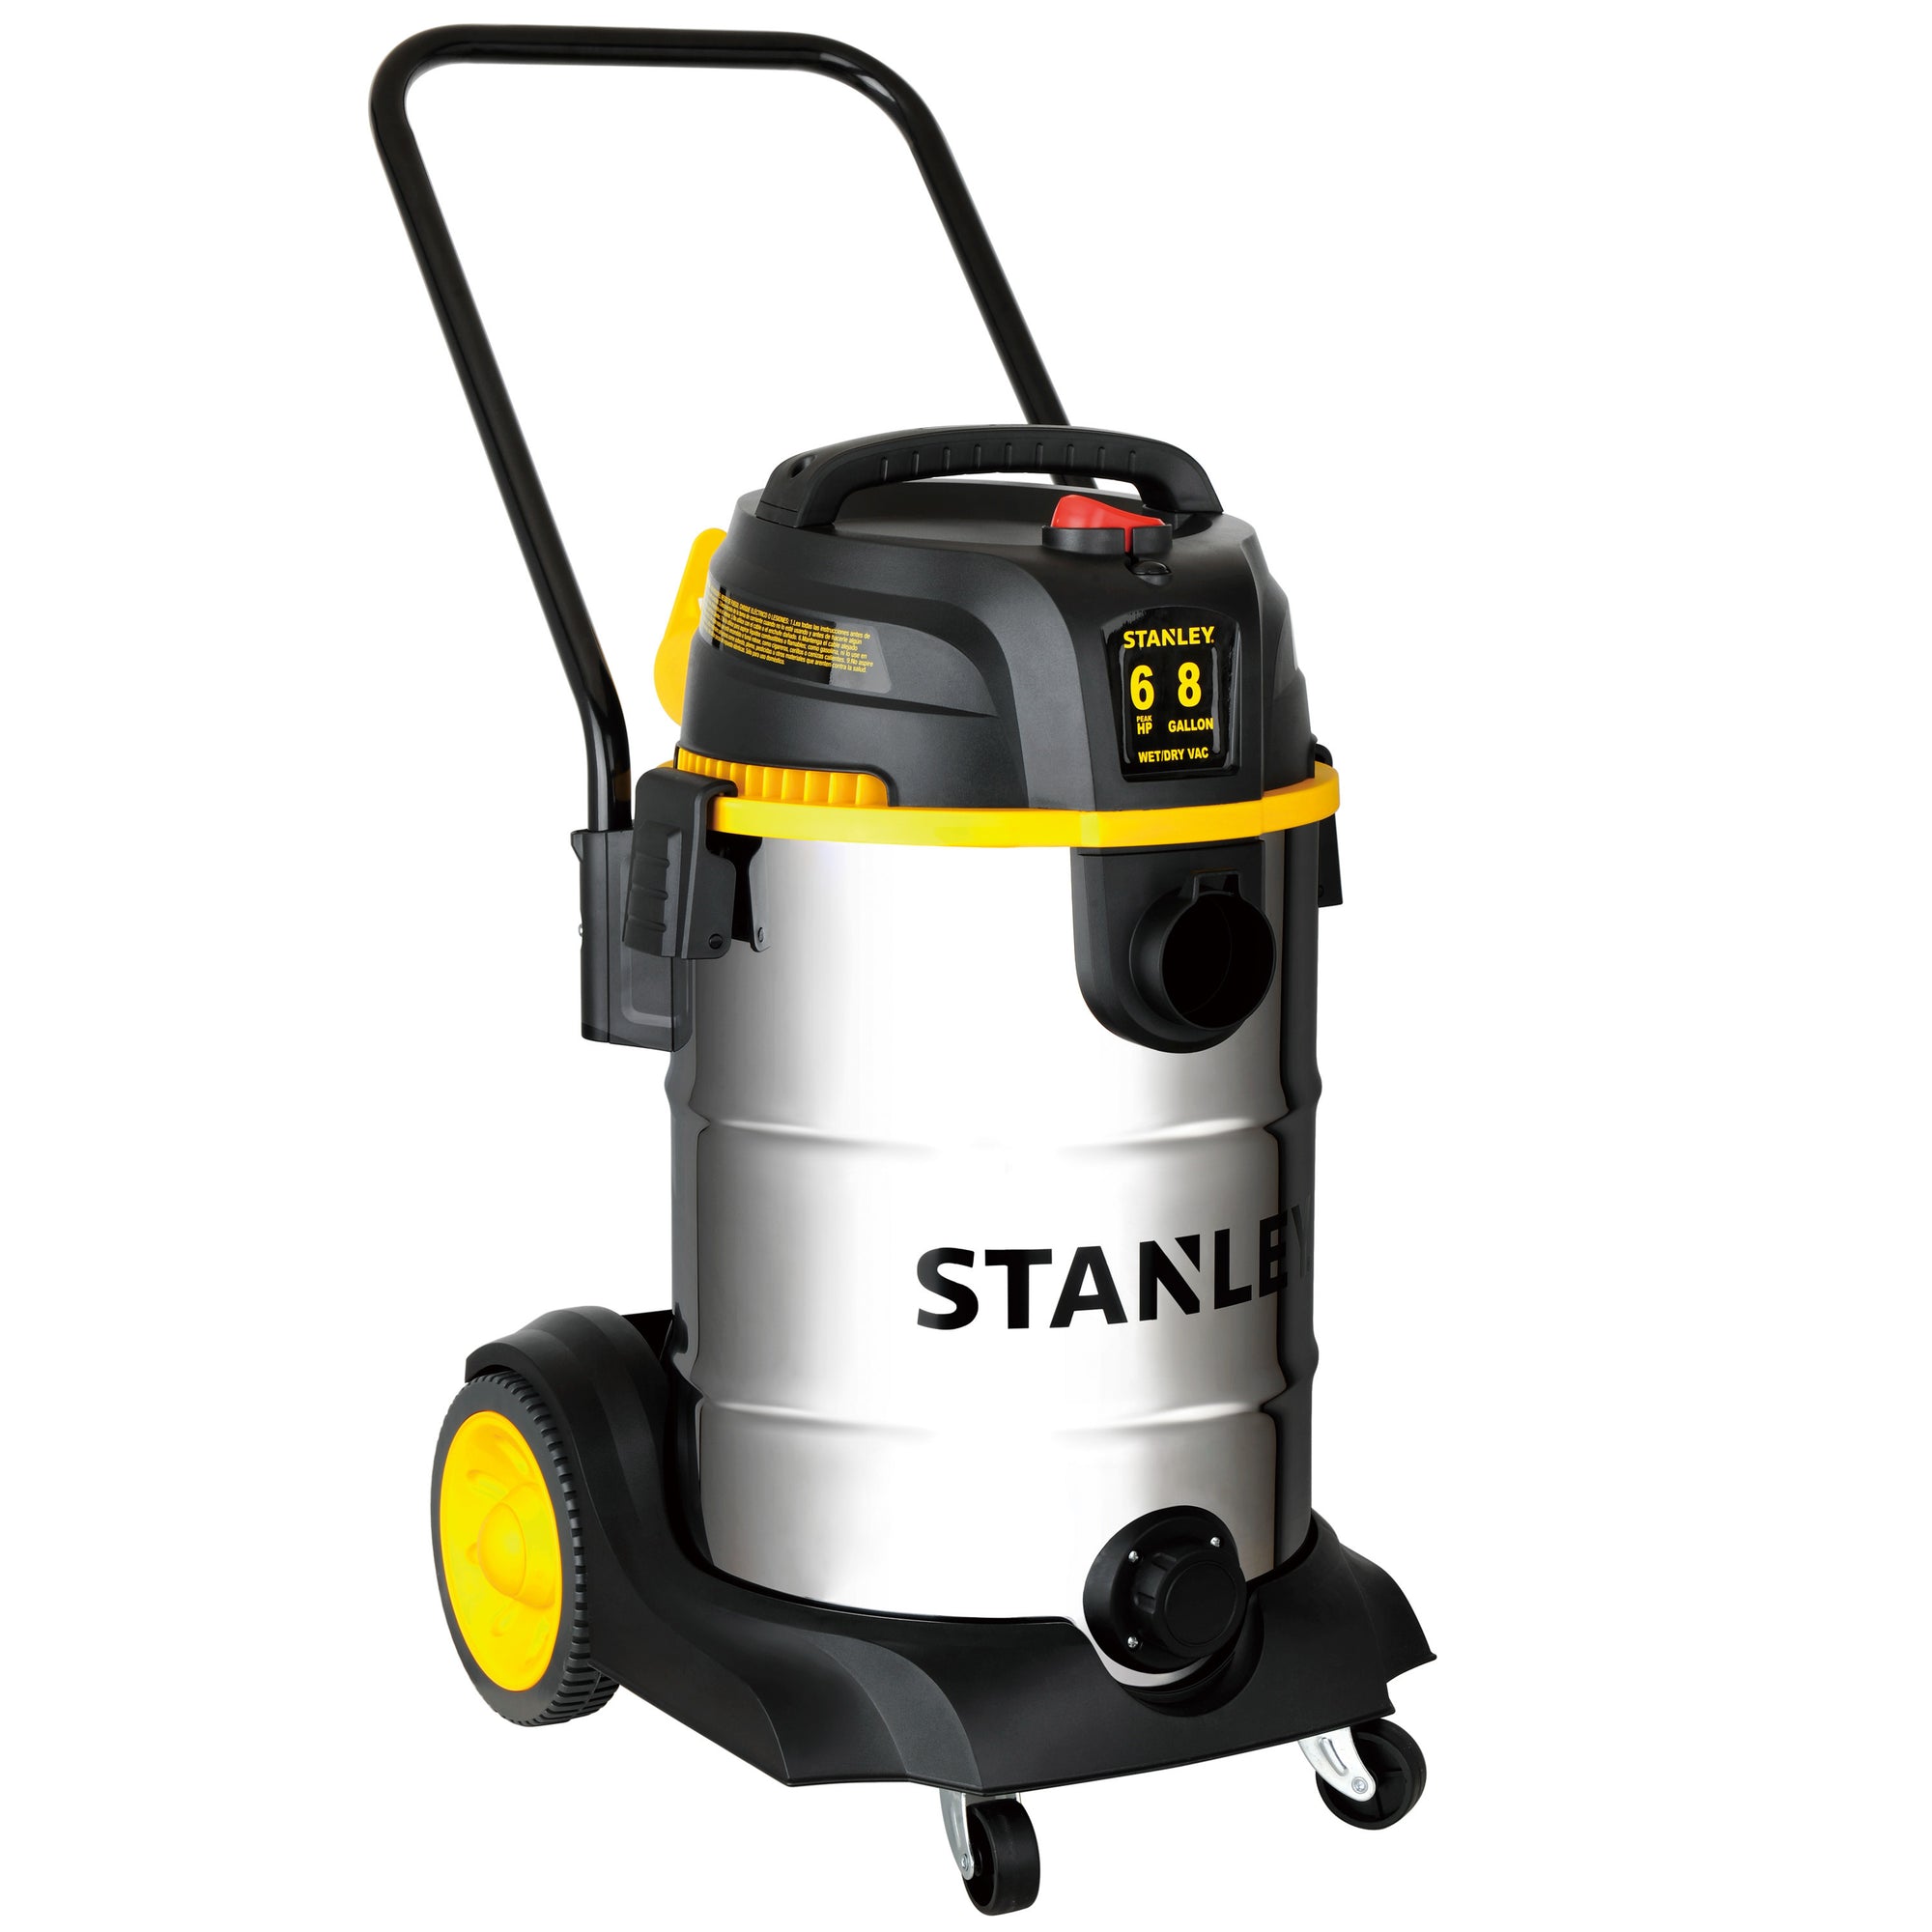 Stanley 12 Gallon Wet/Dry Vacuum, 5.5 Peak HP, Multifunctional 3 in 1 Shop  Vacuum with Blower,1-7/8x6 Hose, Range for Garage, Carpet Clean, Jobsite  SL18199P 